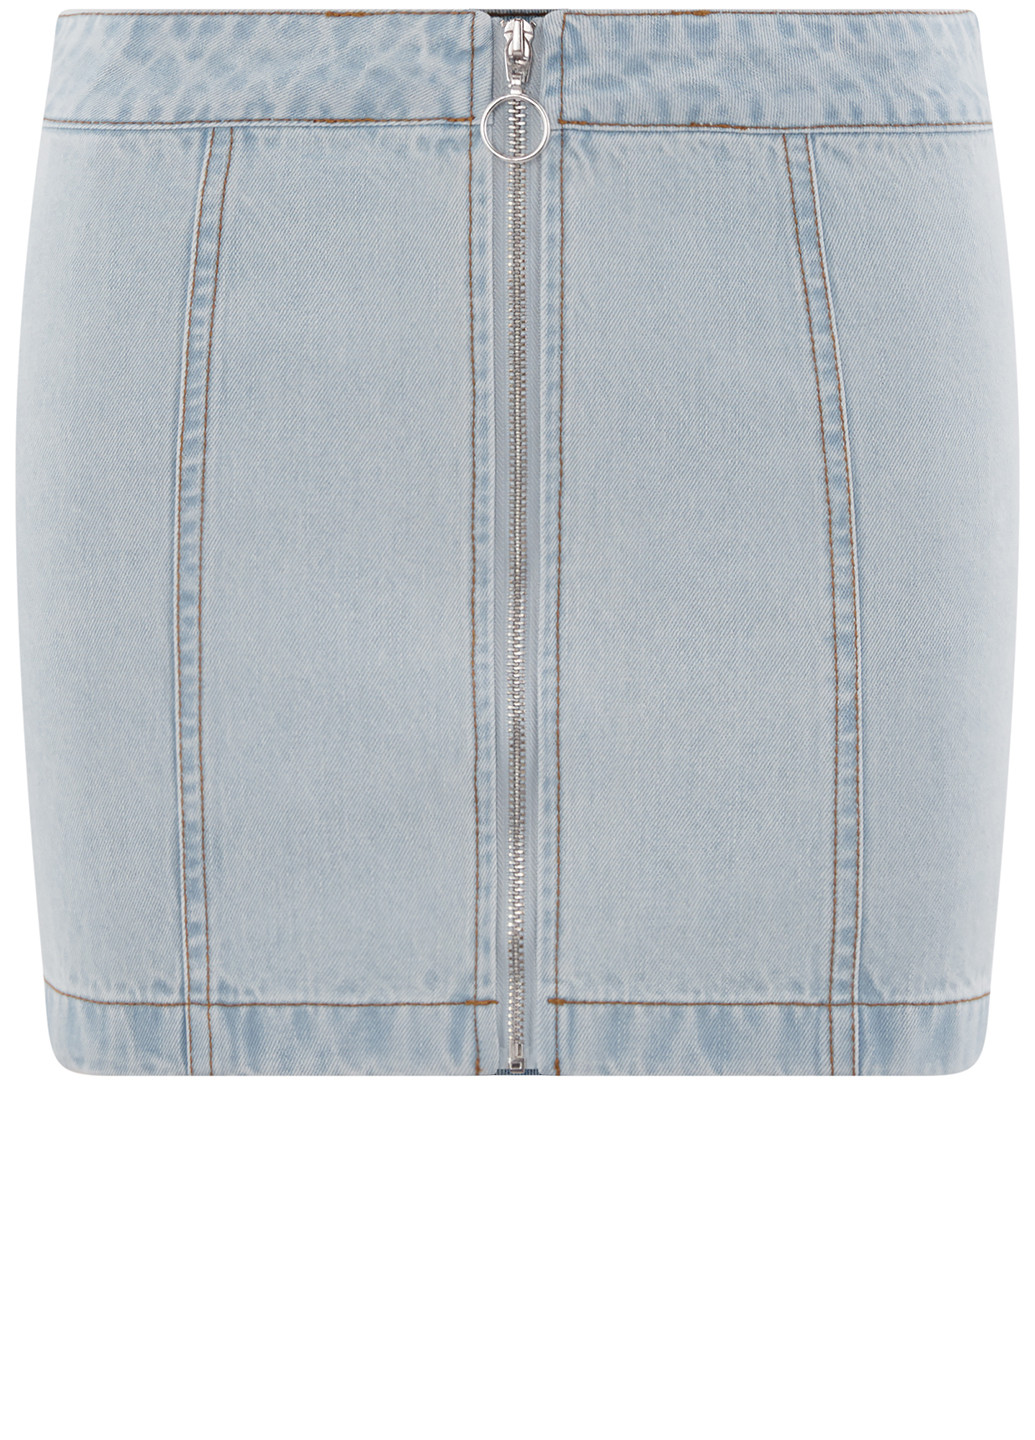 Синяя джинсовая однотонная юбка Oodji мини